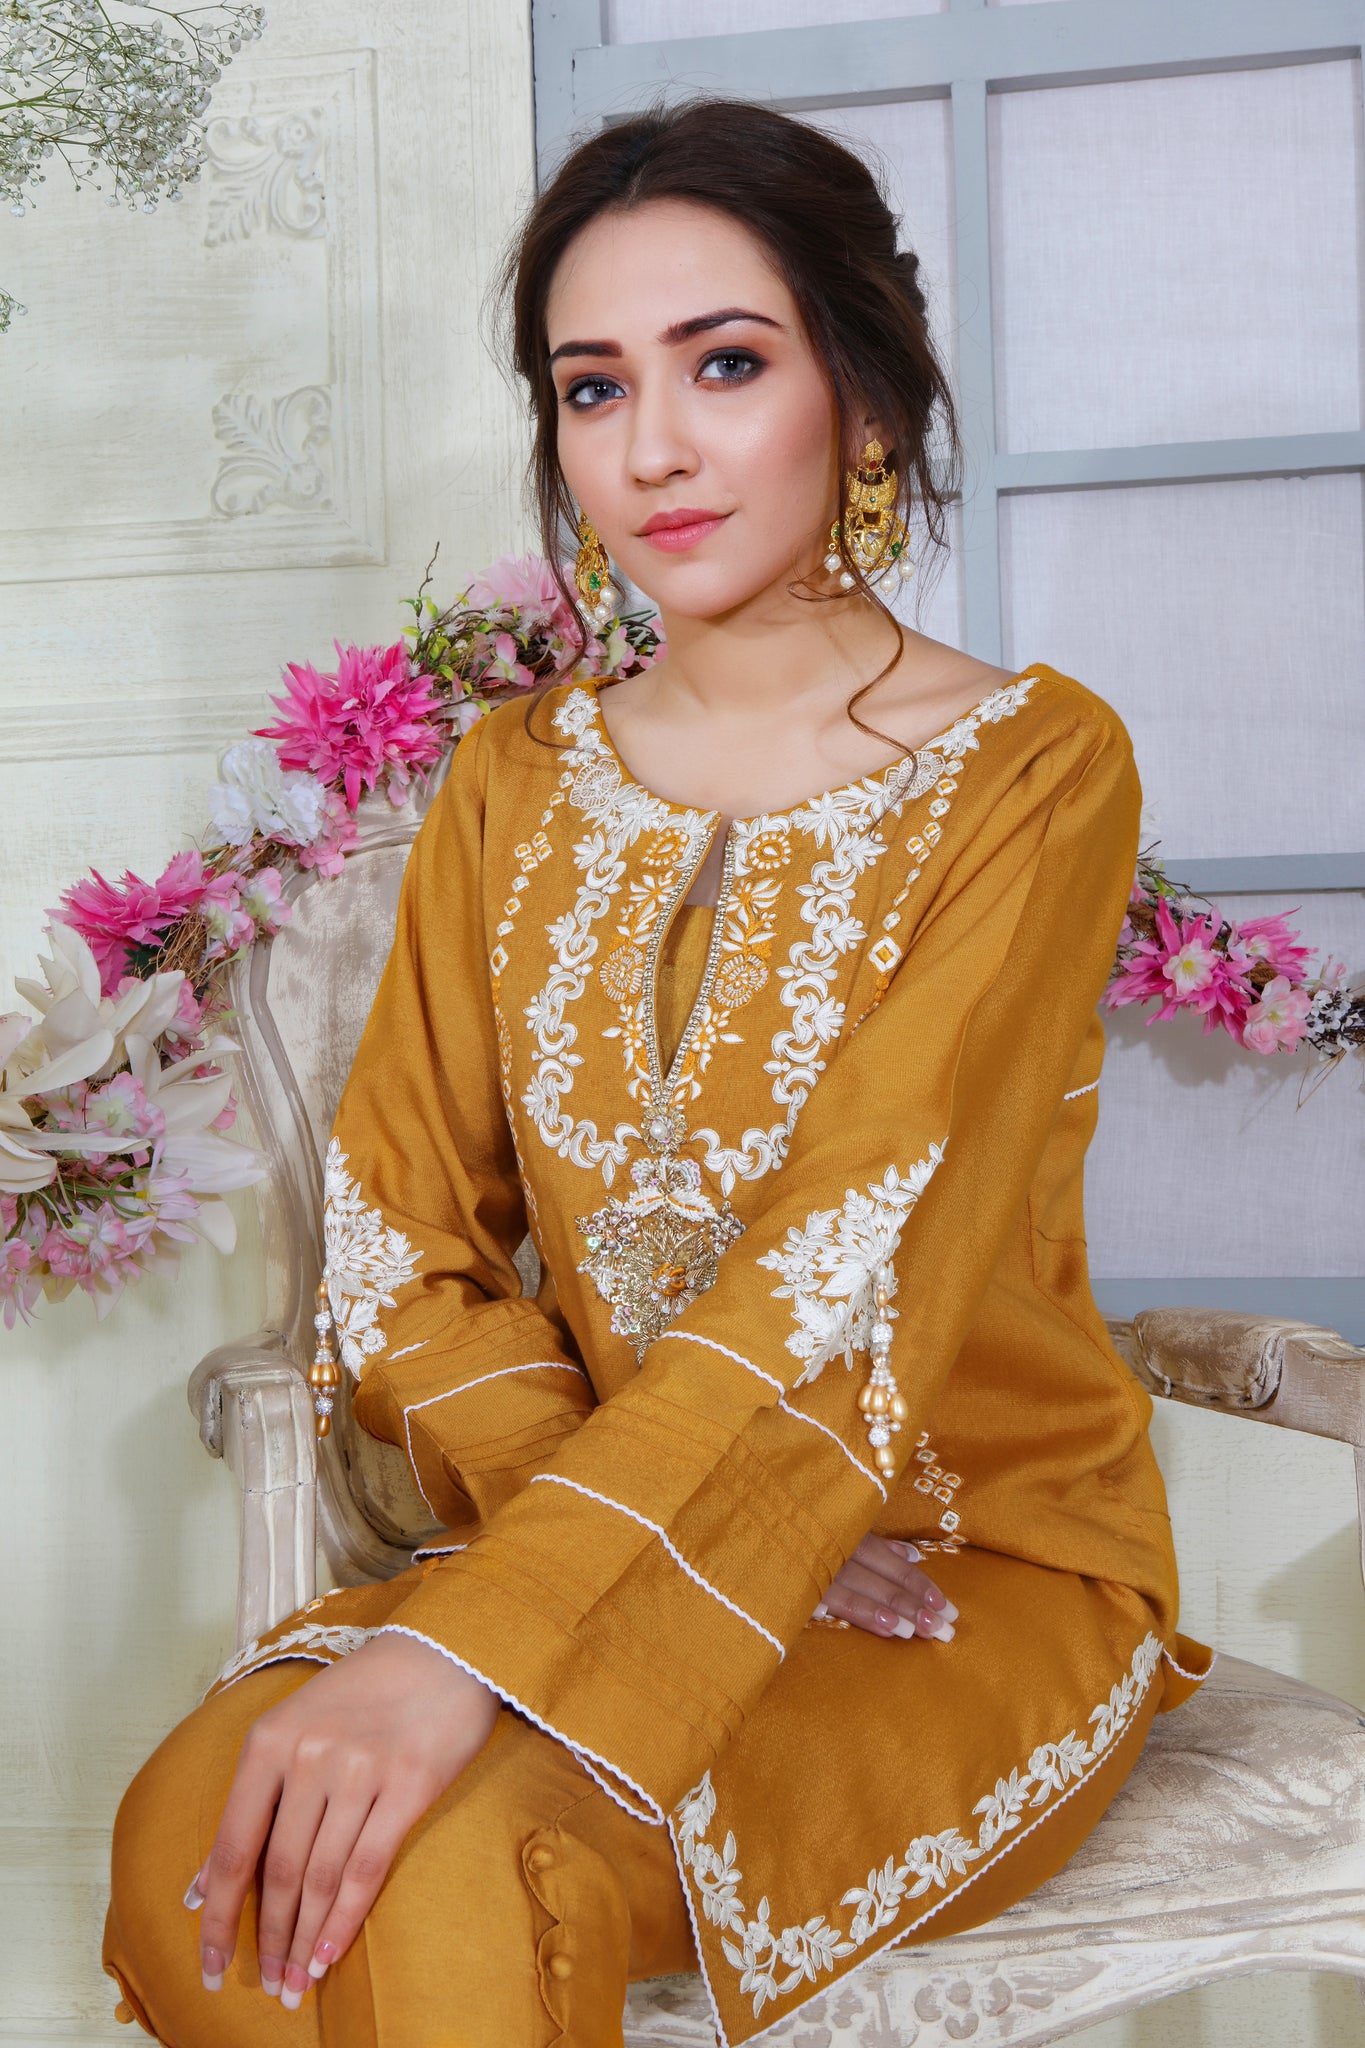 Medallion | Pakistani Designer Outfit | Sarosh Salman